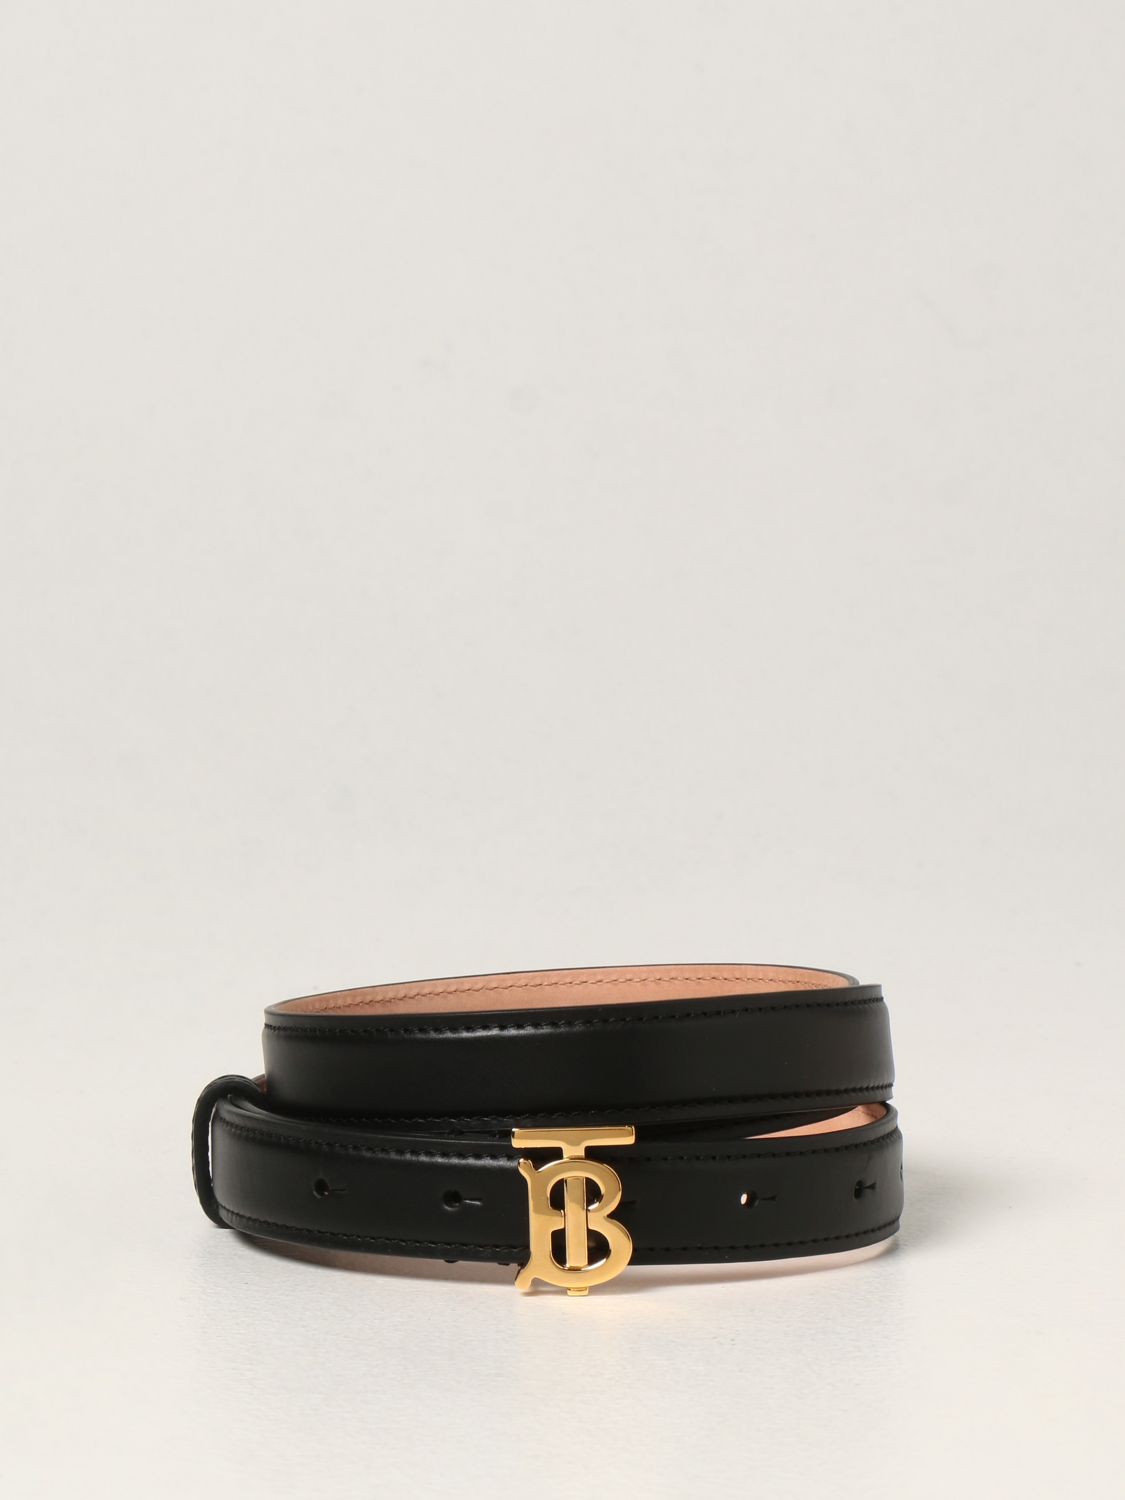 BURBERRY: TB leather belt - Black  Burberry belt 8023439 online at